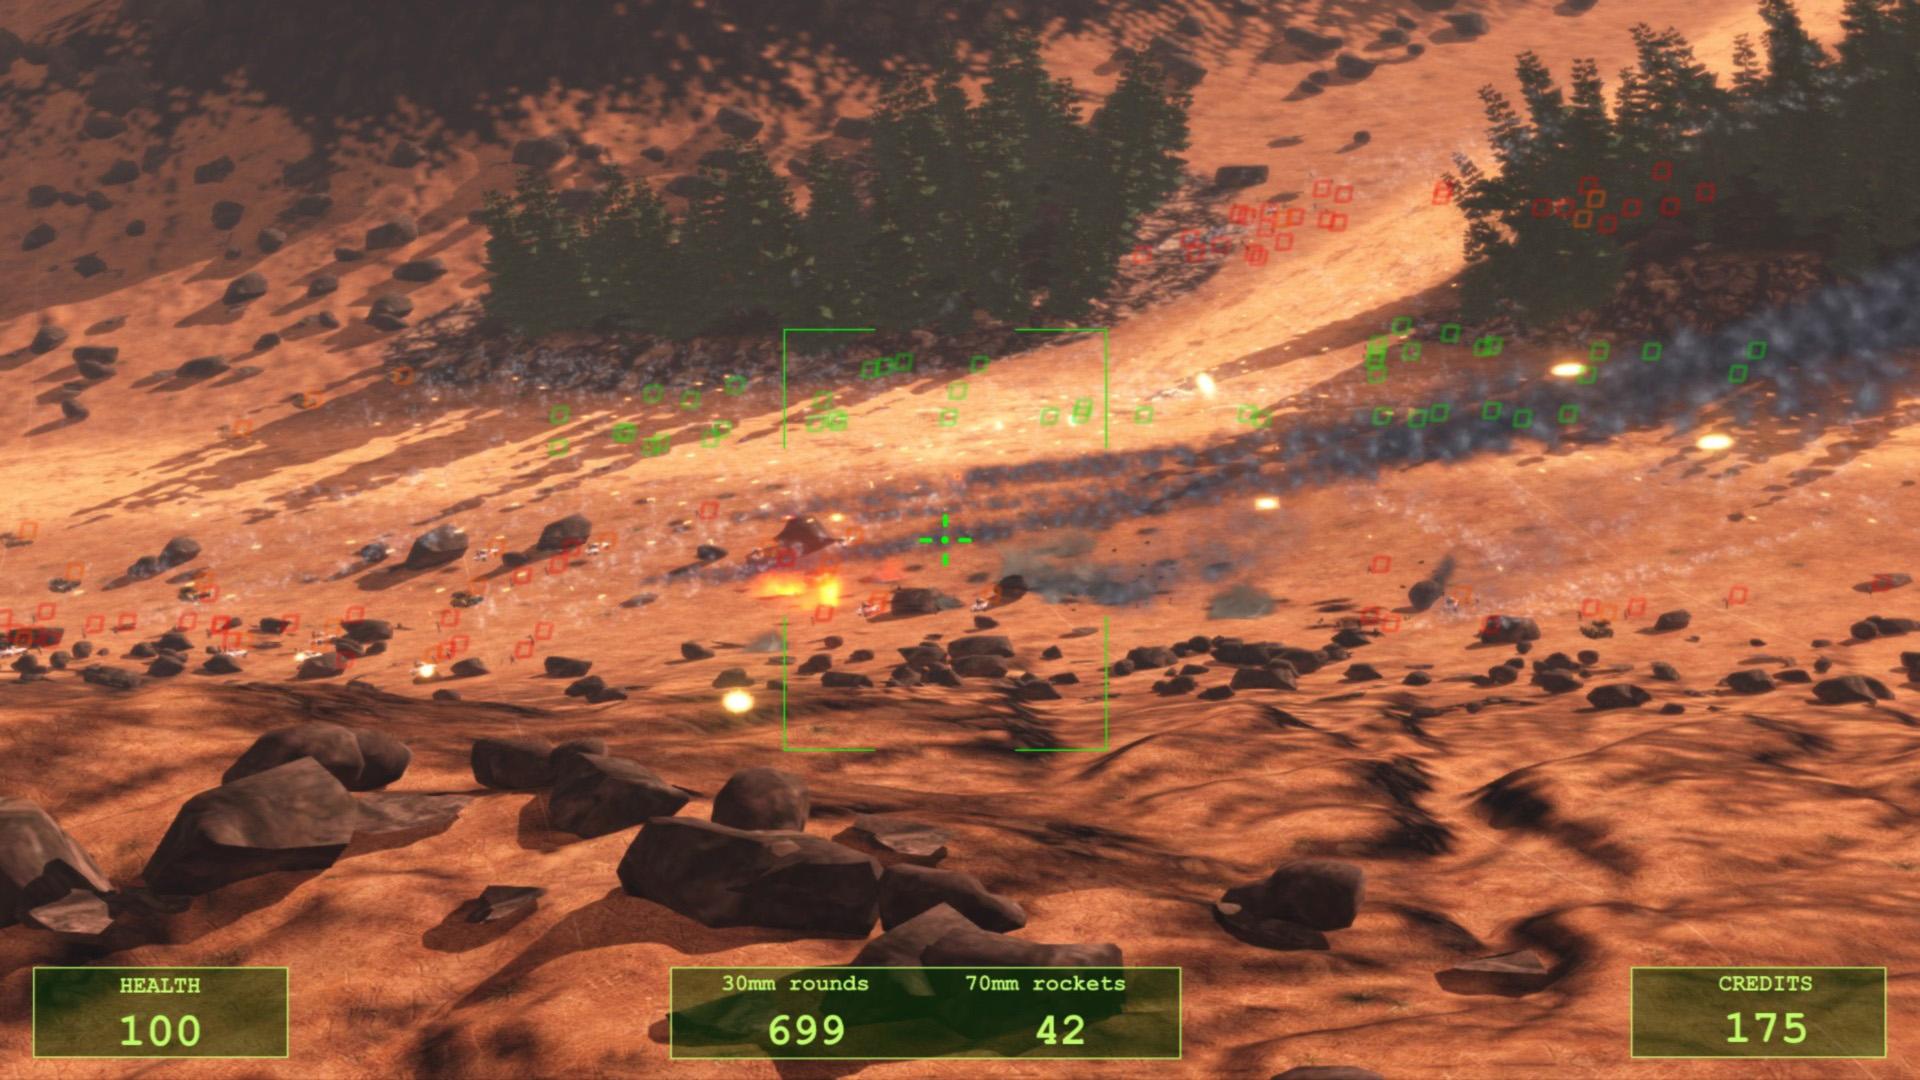 Screenshot №6 from game Aerial Destruction